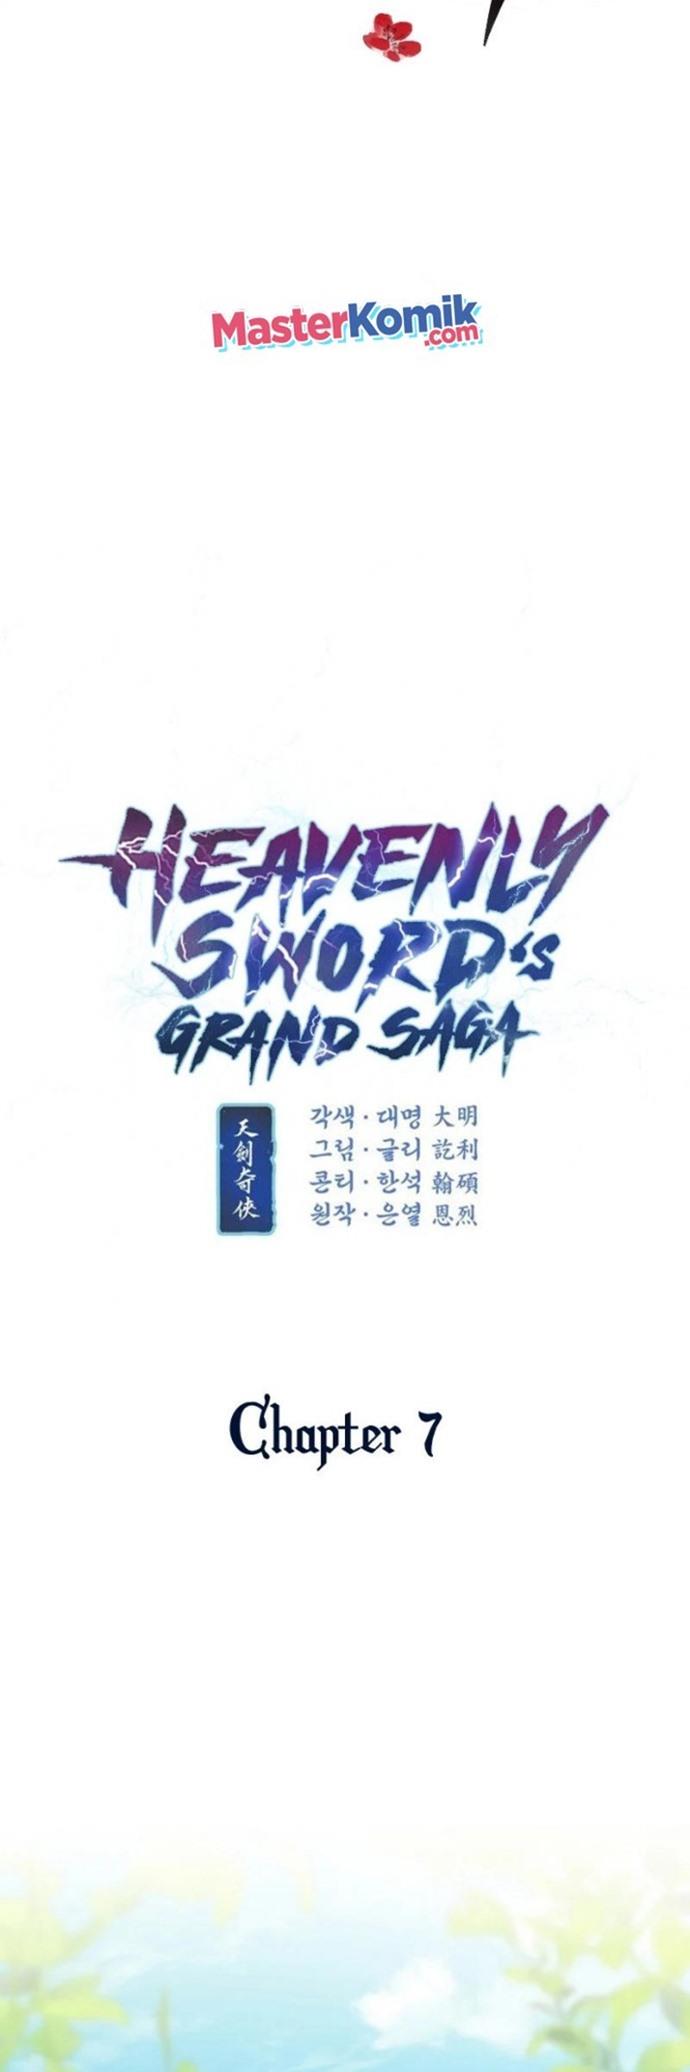 Heavenly Sword’s Grand Saga Chapter 7